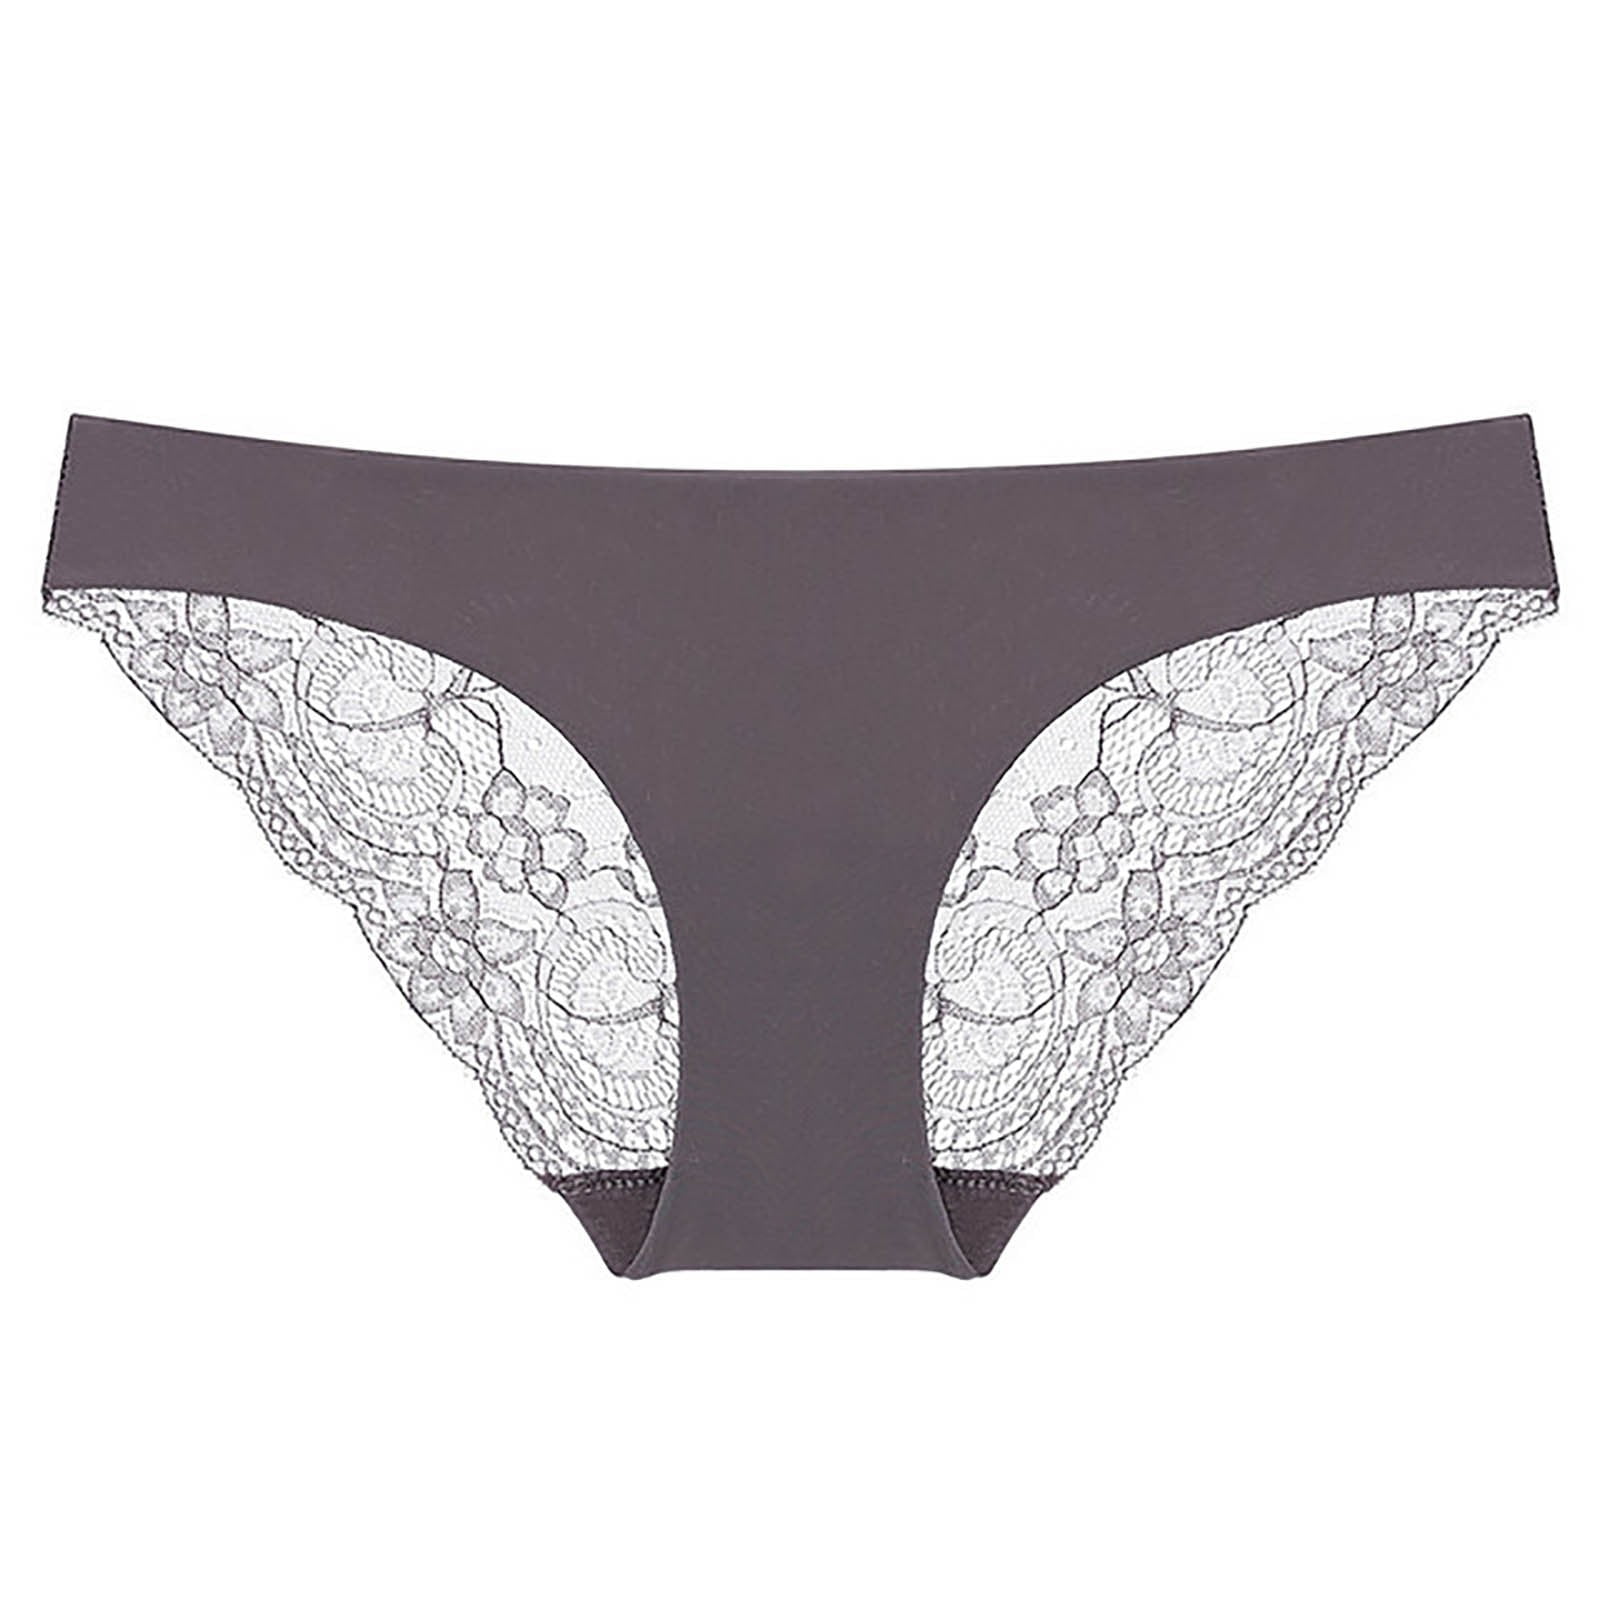 FASHION Women's Sexy Lace Ice Silk Panties Seamless Underwear Panty #086